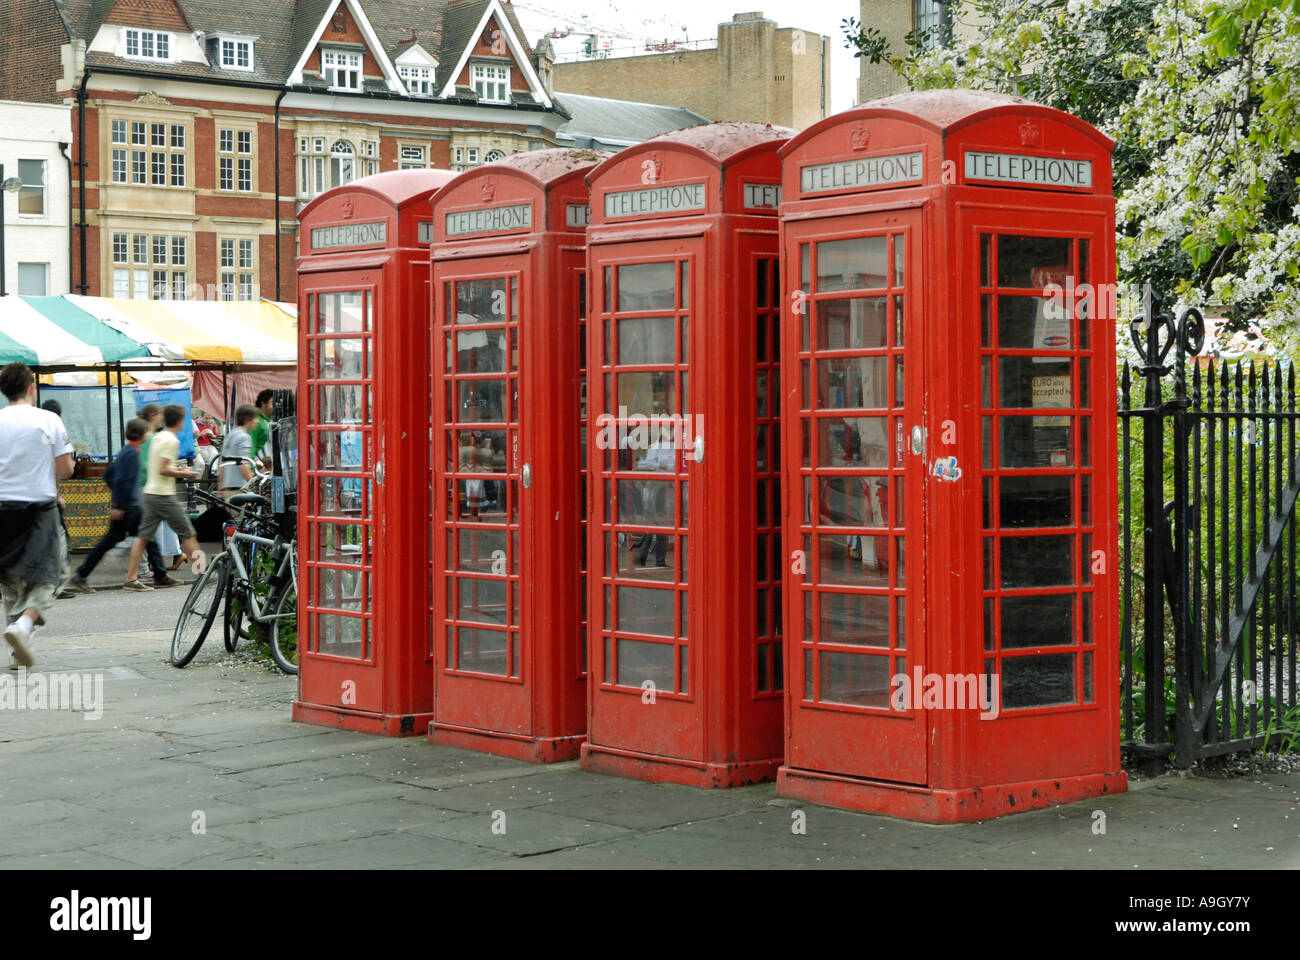 Four public telephone kiosks near the Market Square, Cambridge Stock Photo